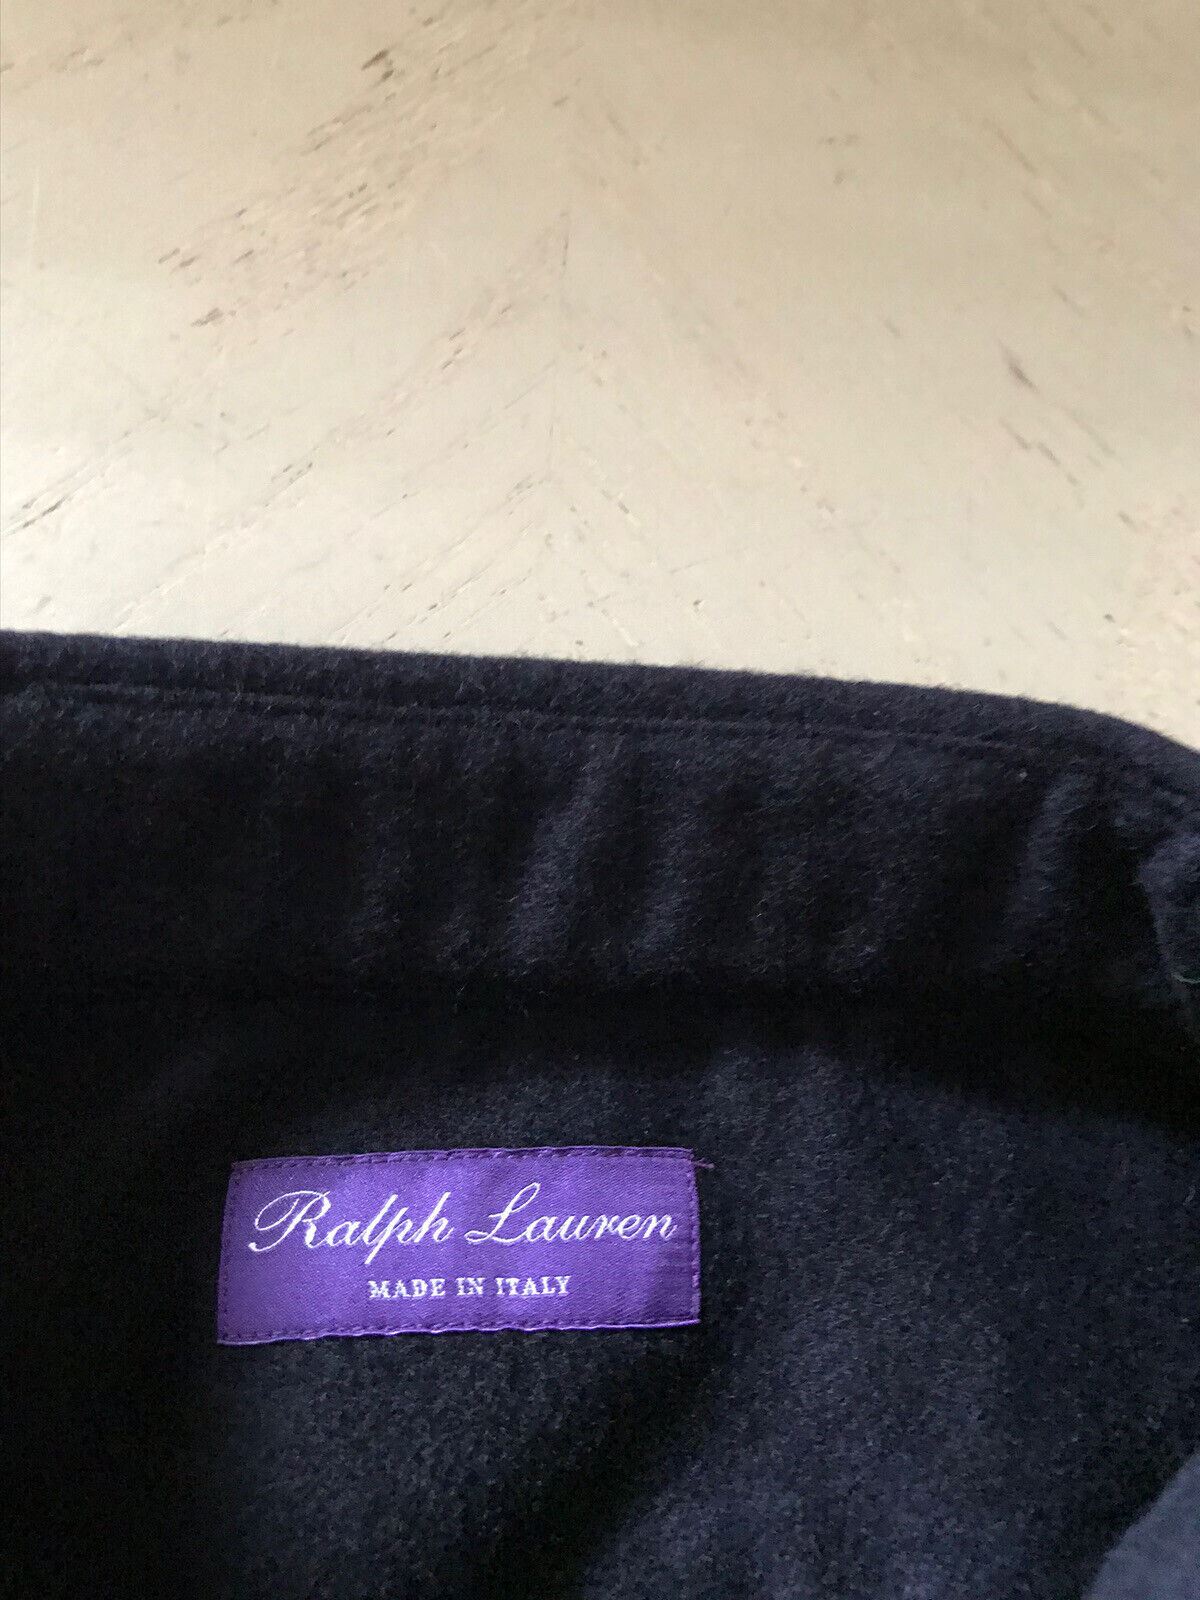 NWT $1295 Ralph Lauren Purple Label Men's James Cashmere Shirt Navy S